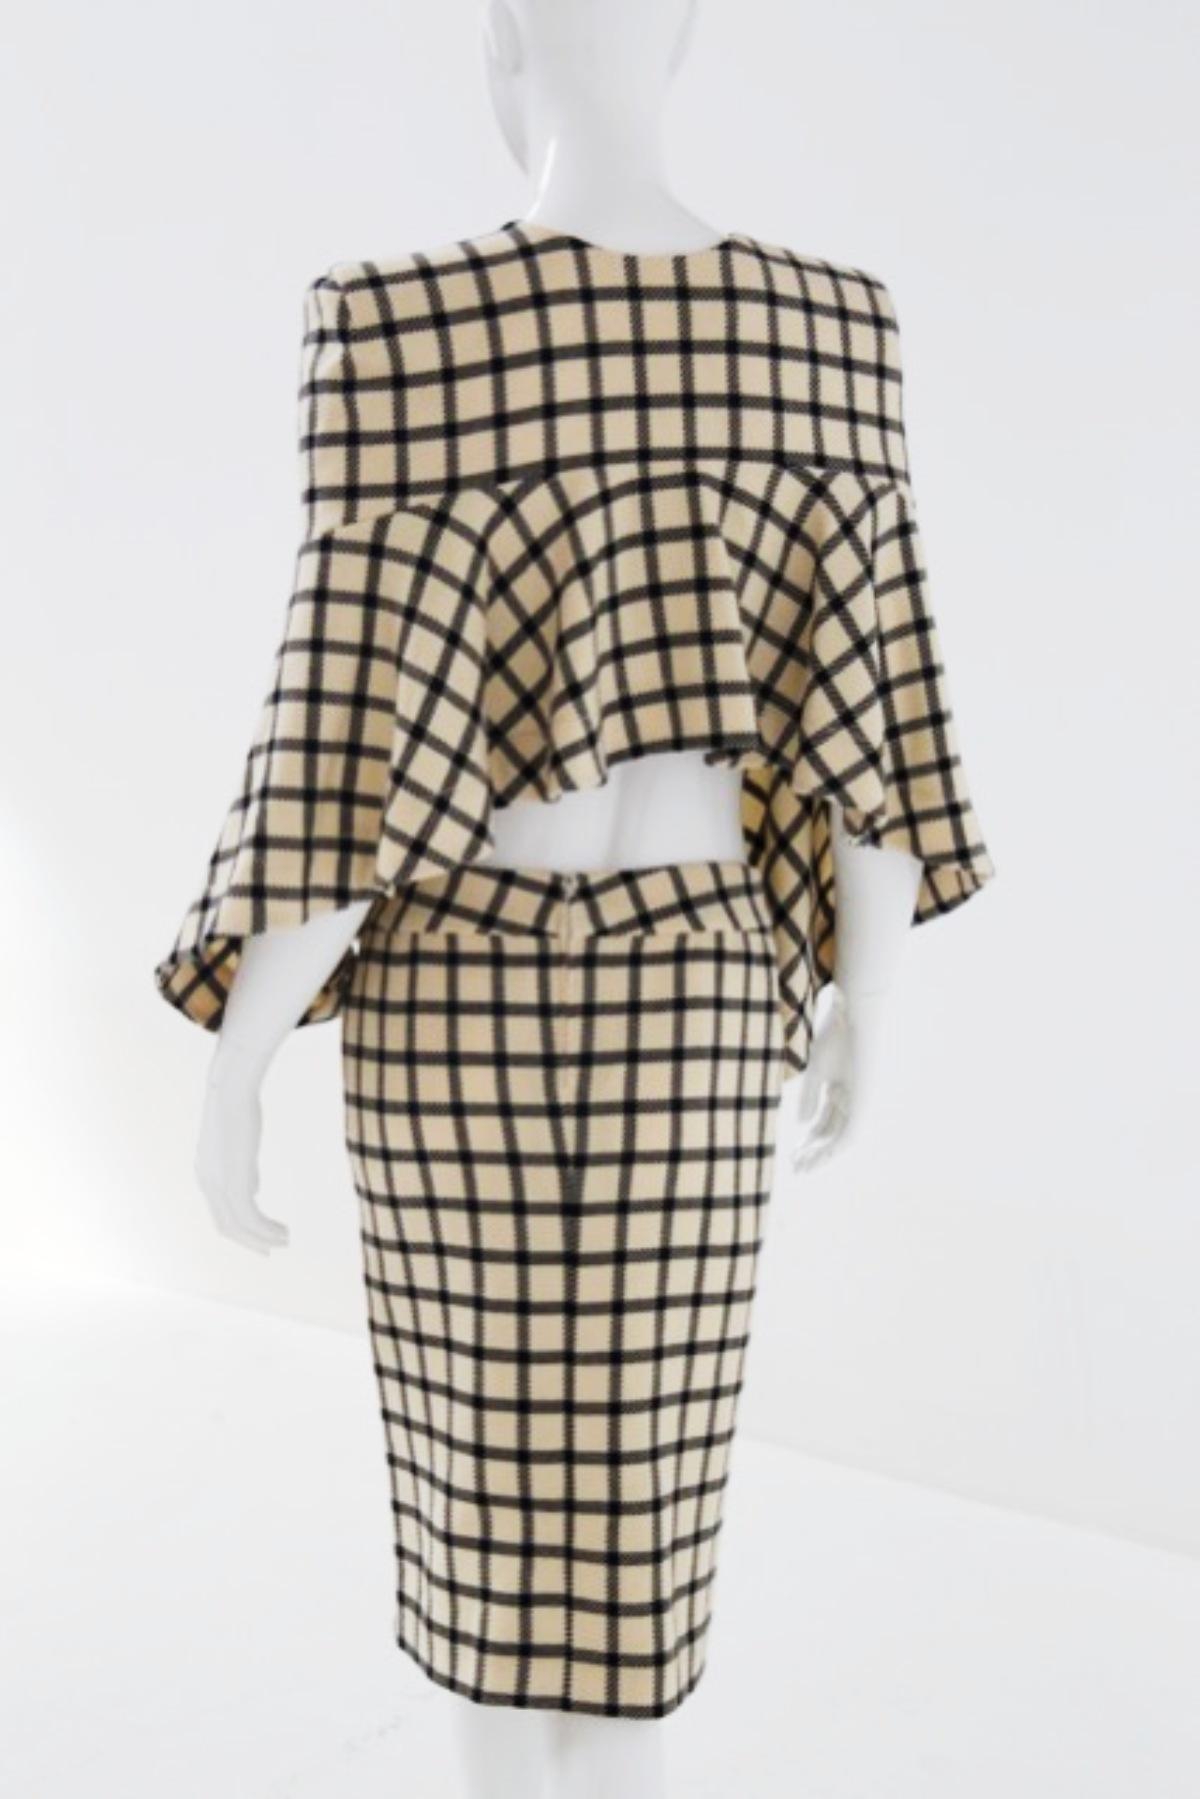 Pierre Cardin Vintage Check Wool Suit For Sale 3